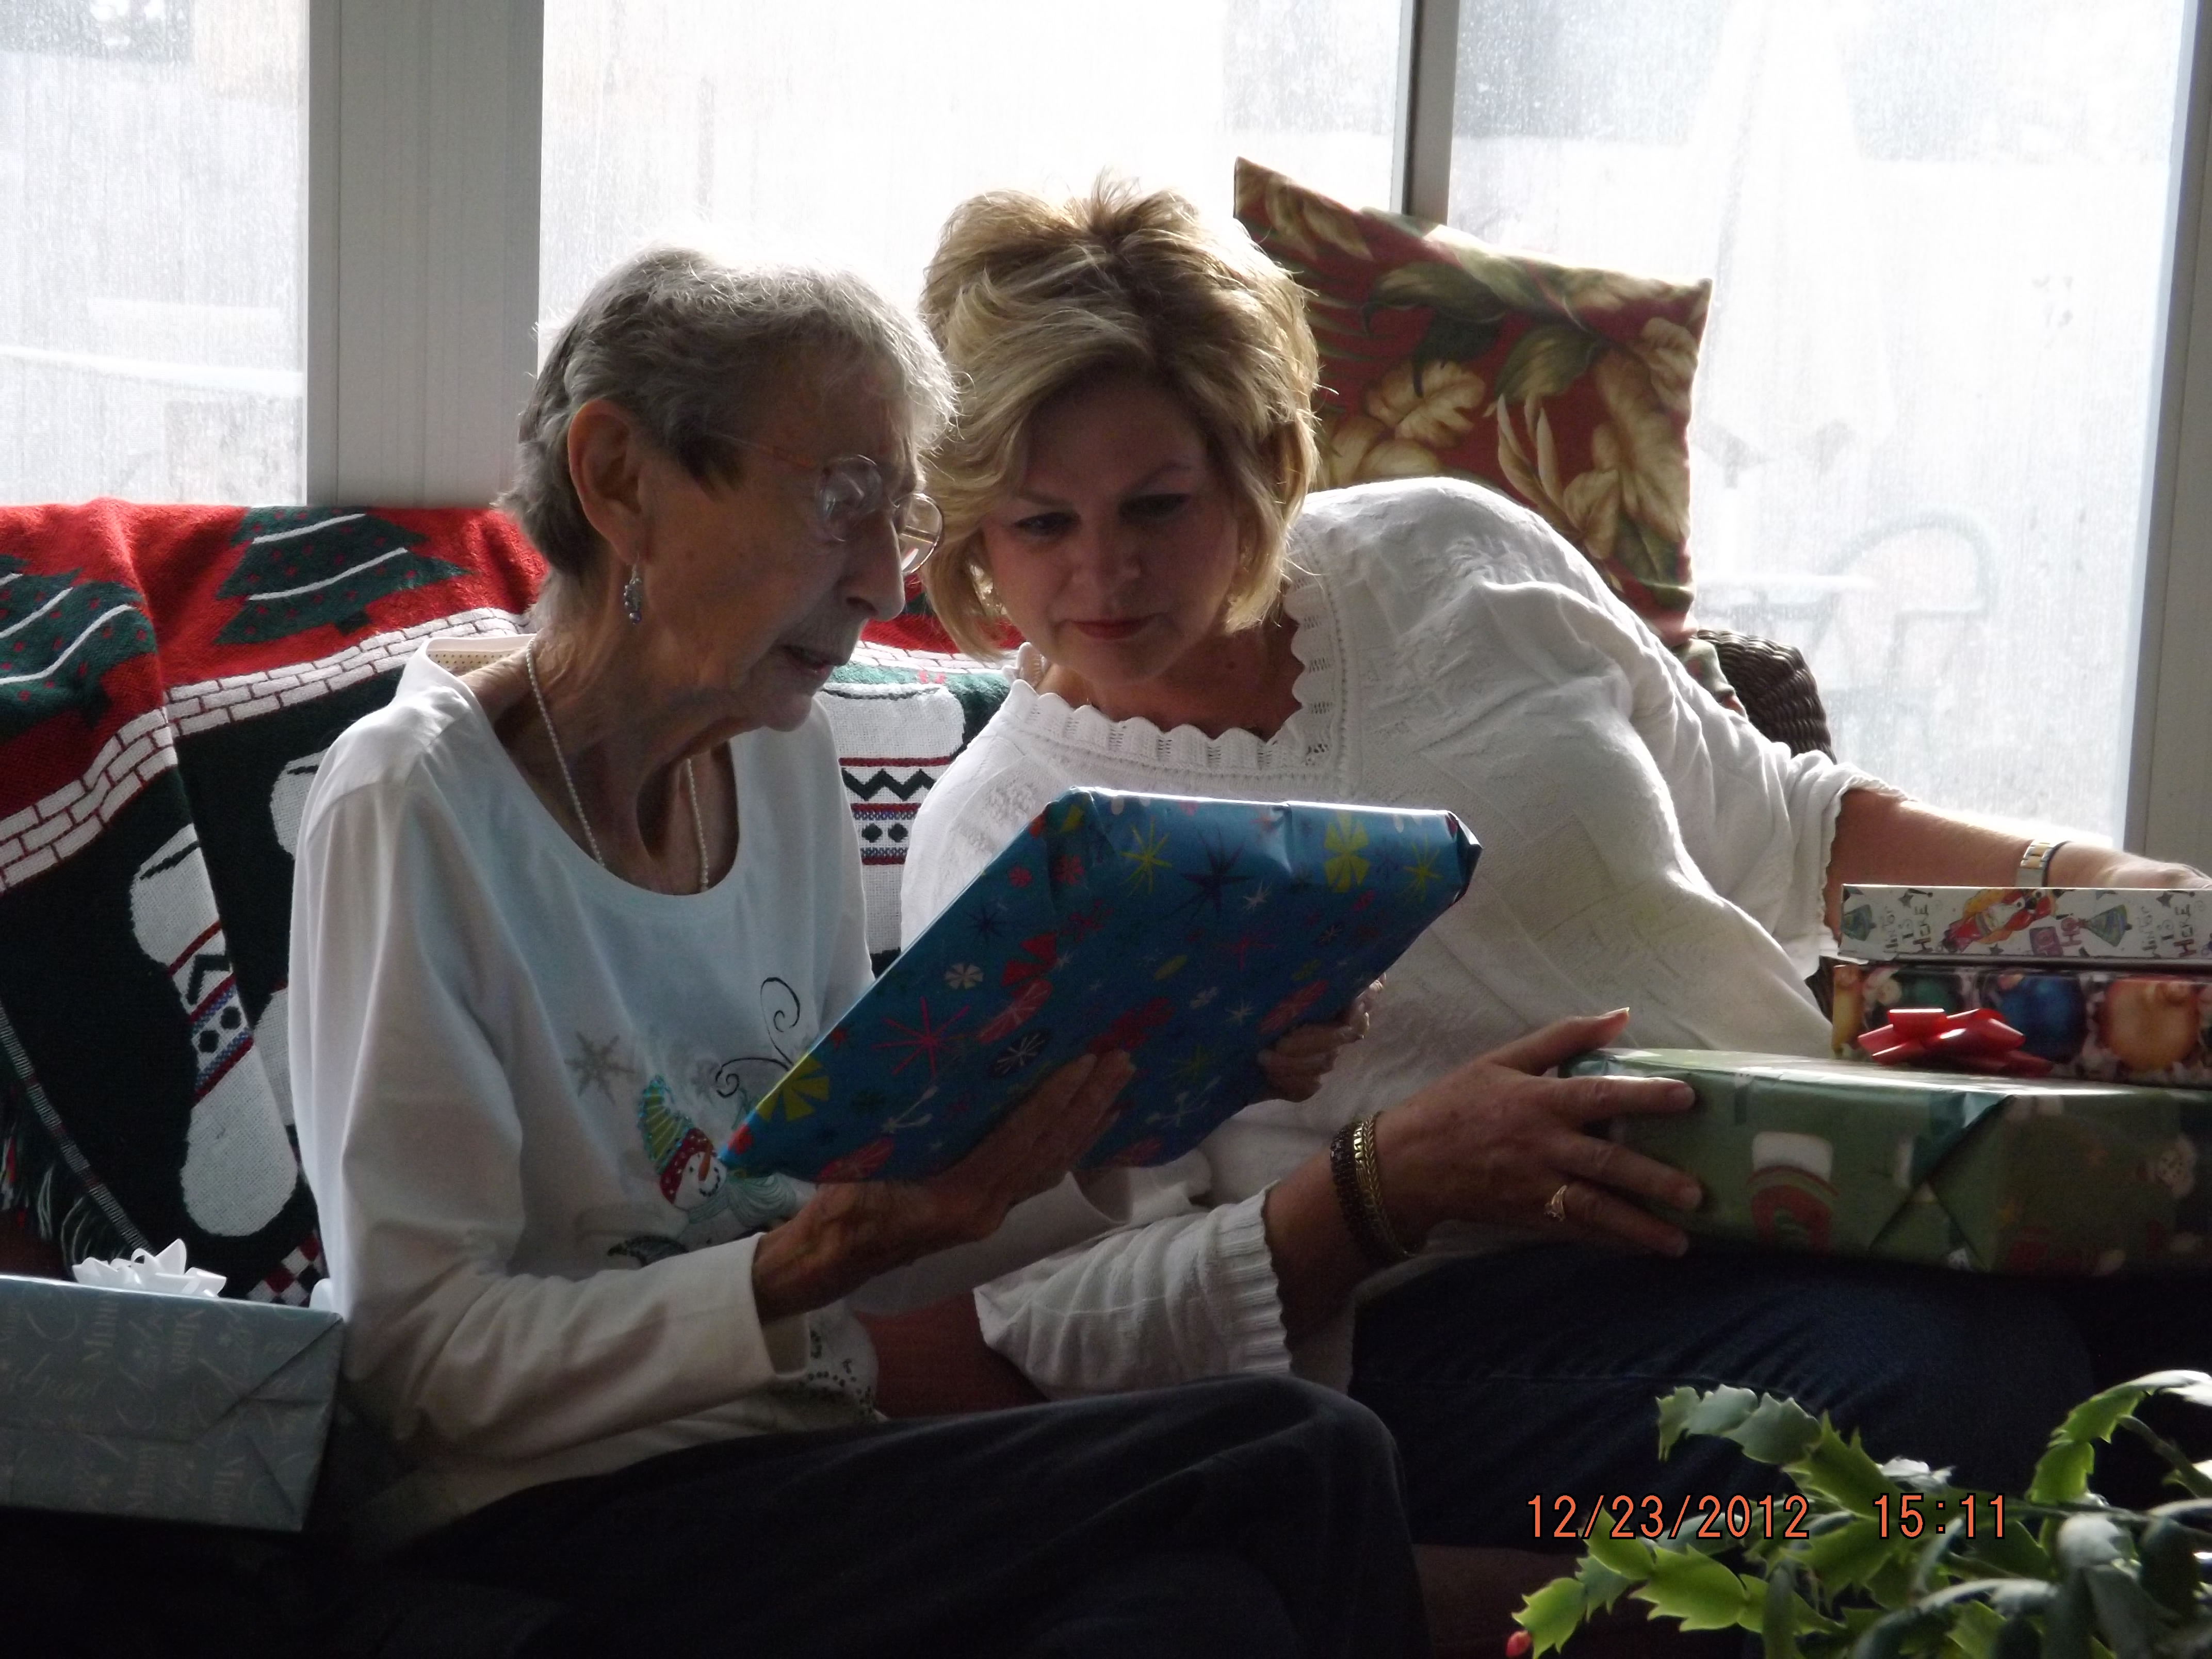 Linda & Doris exchanging Christmas presents.